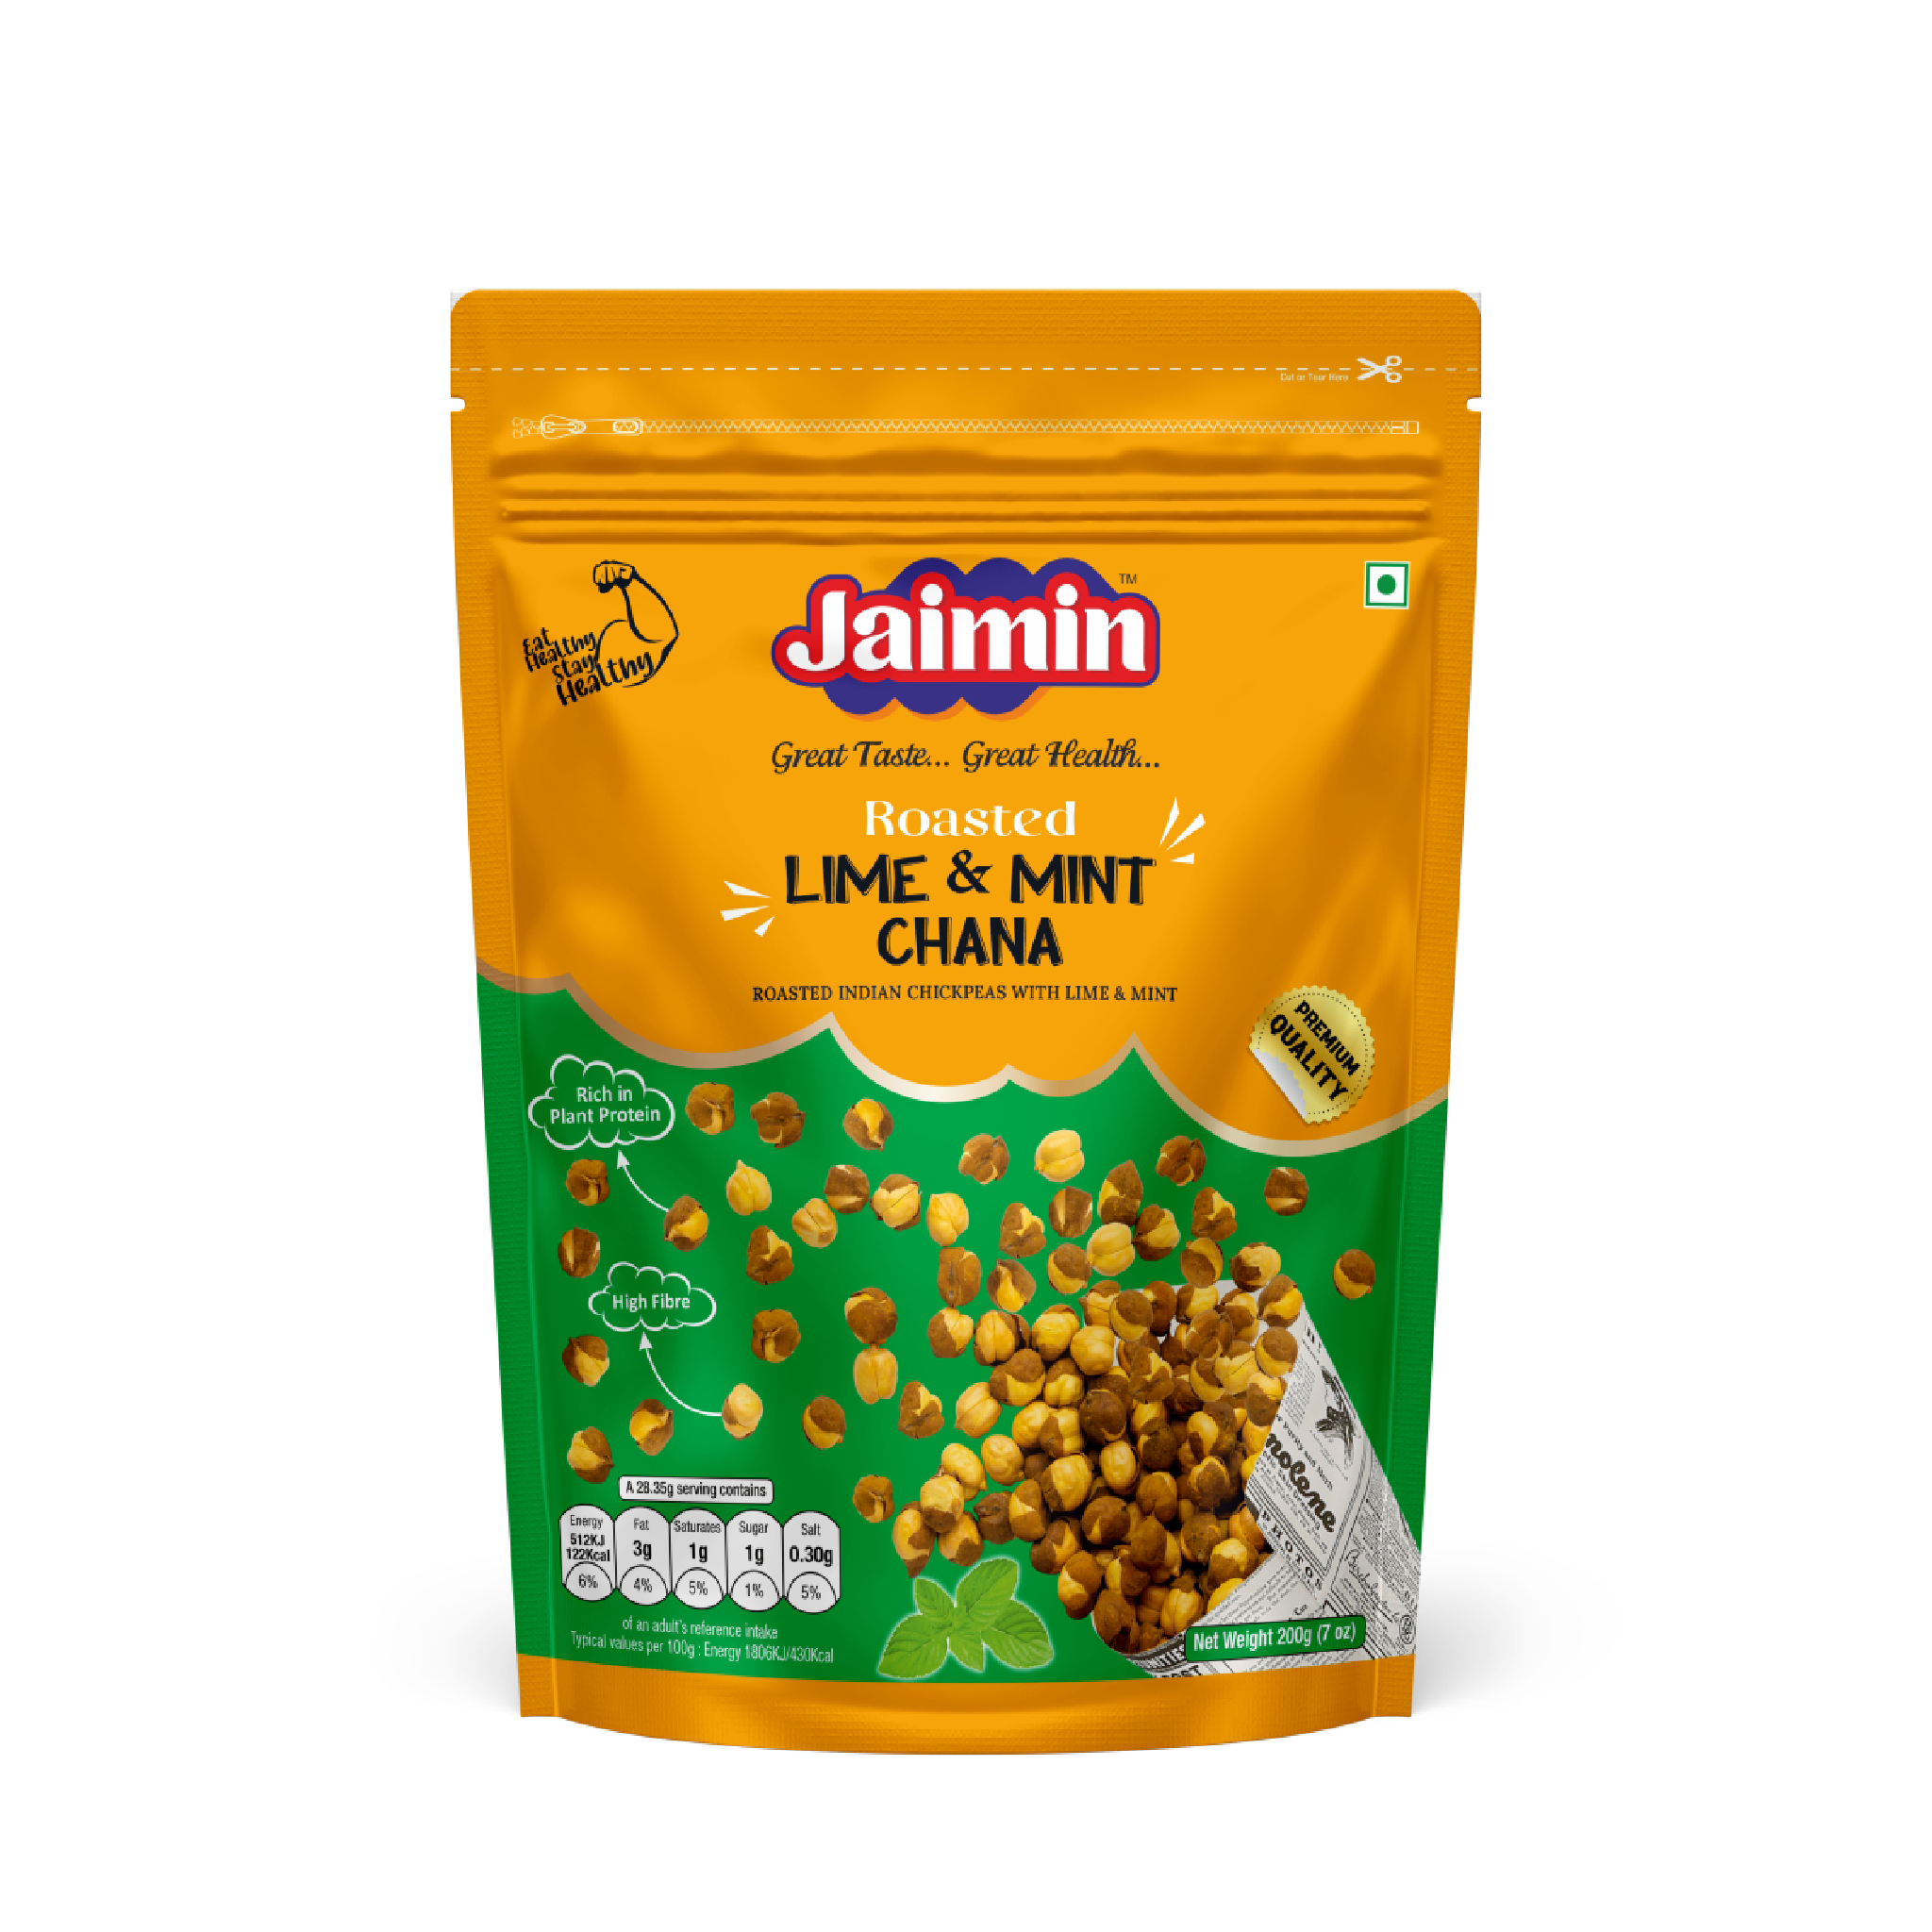 Jaimin Roasted Chana - Lemon & Mint 200g